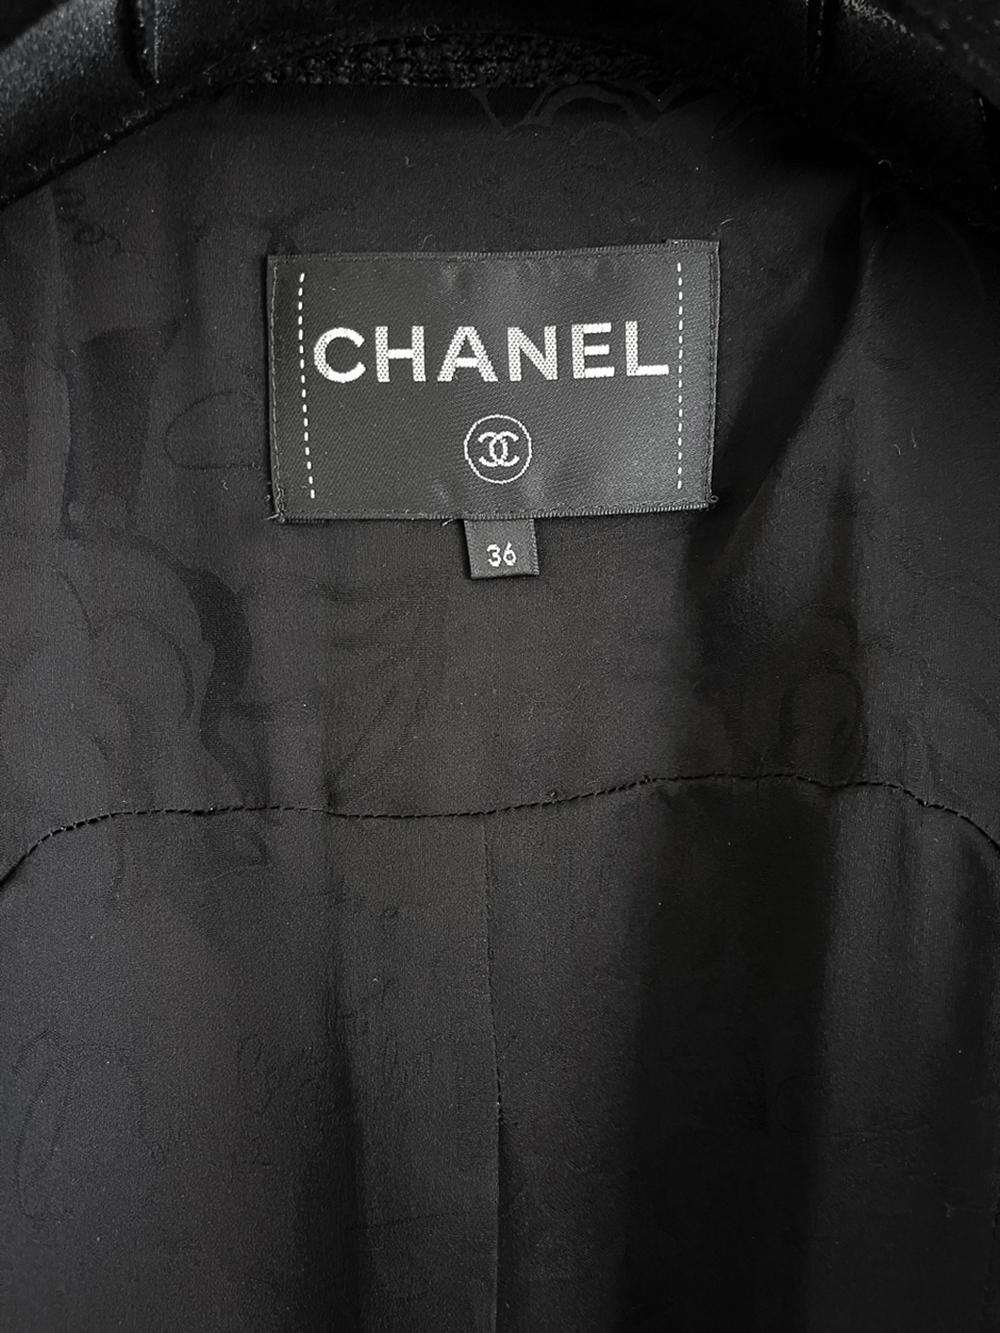 New Cuba Collection Black Tweed Jacket 7